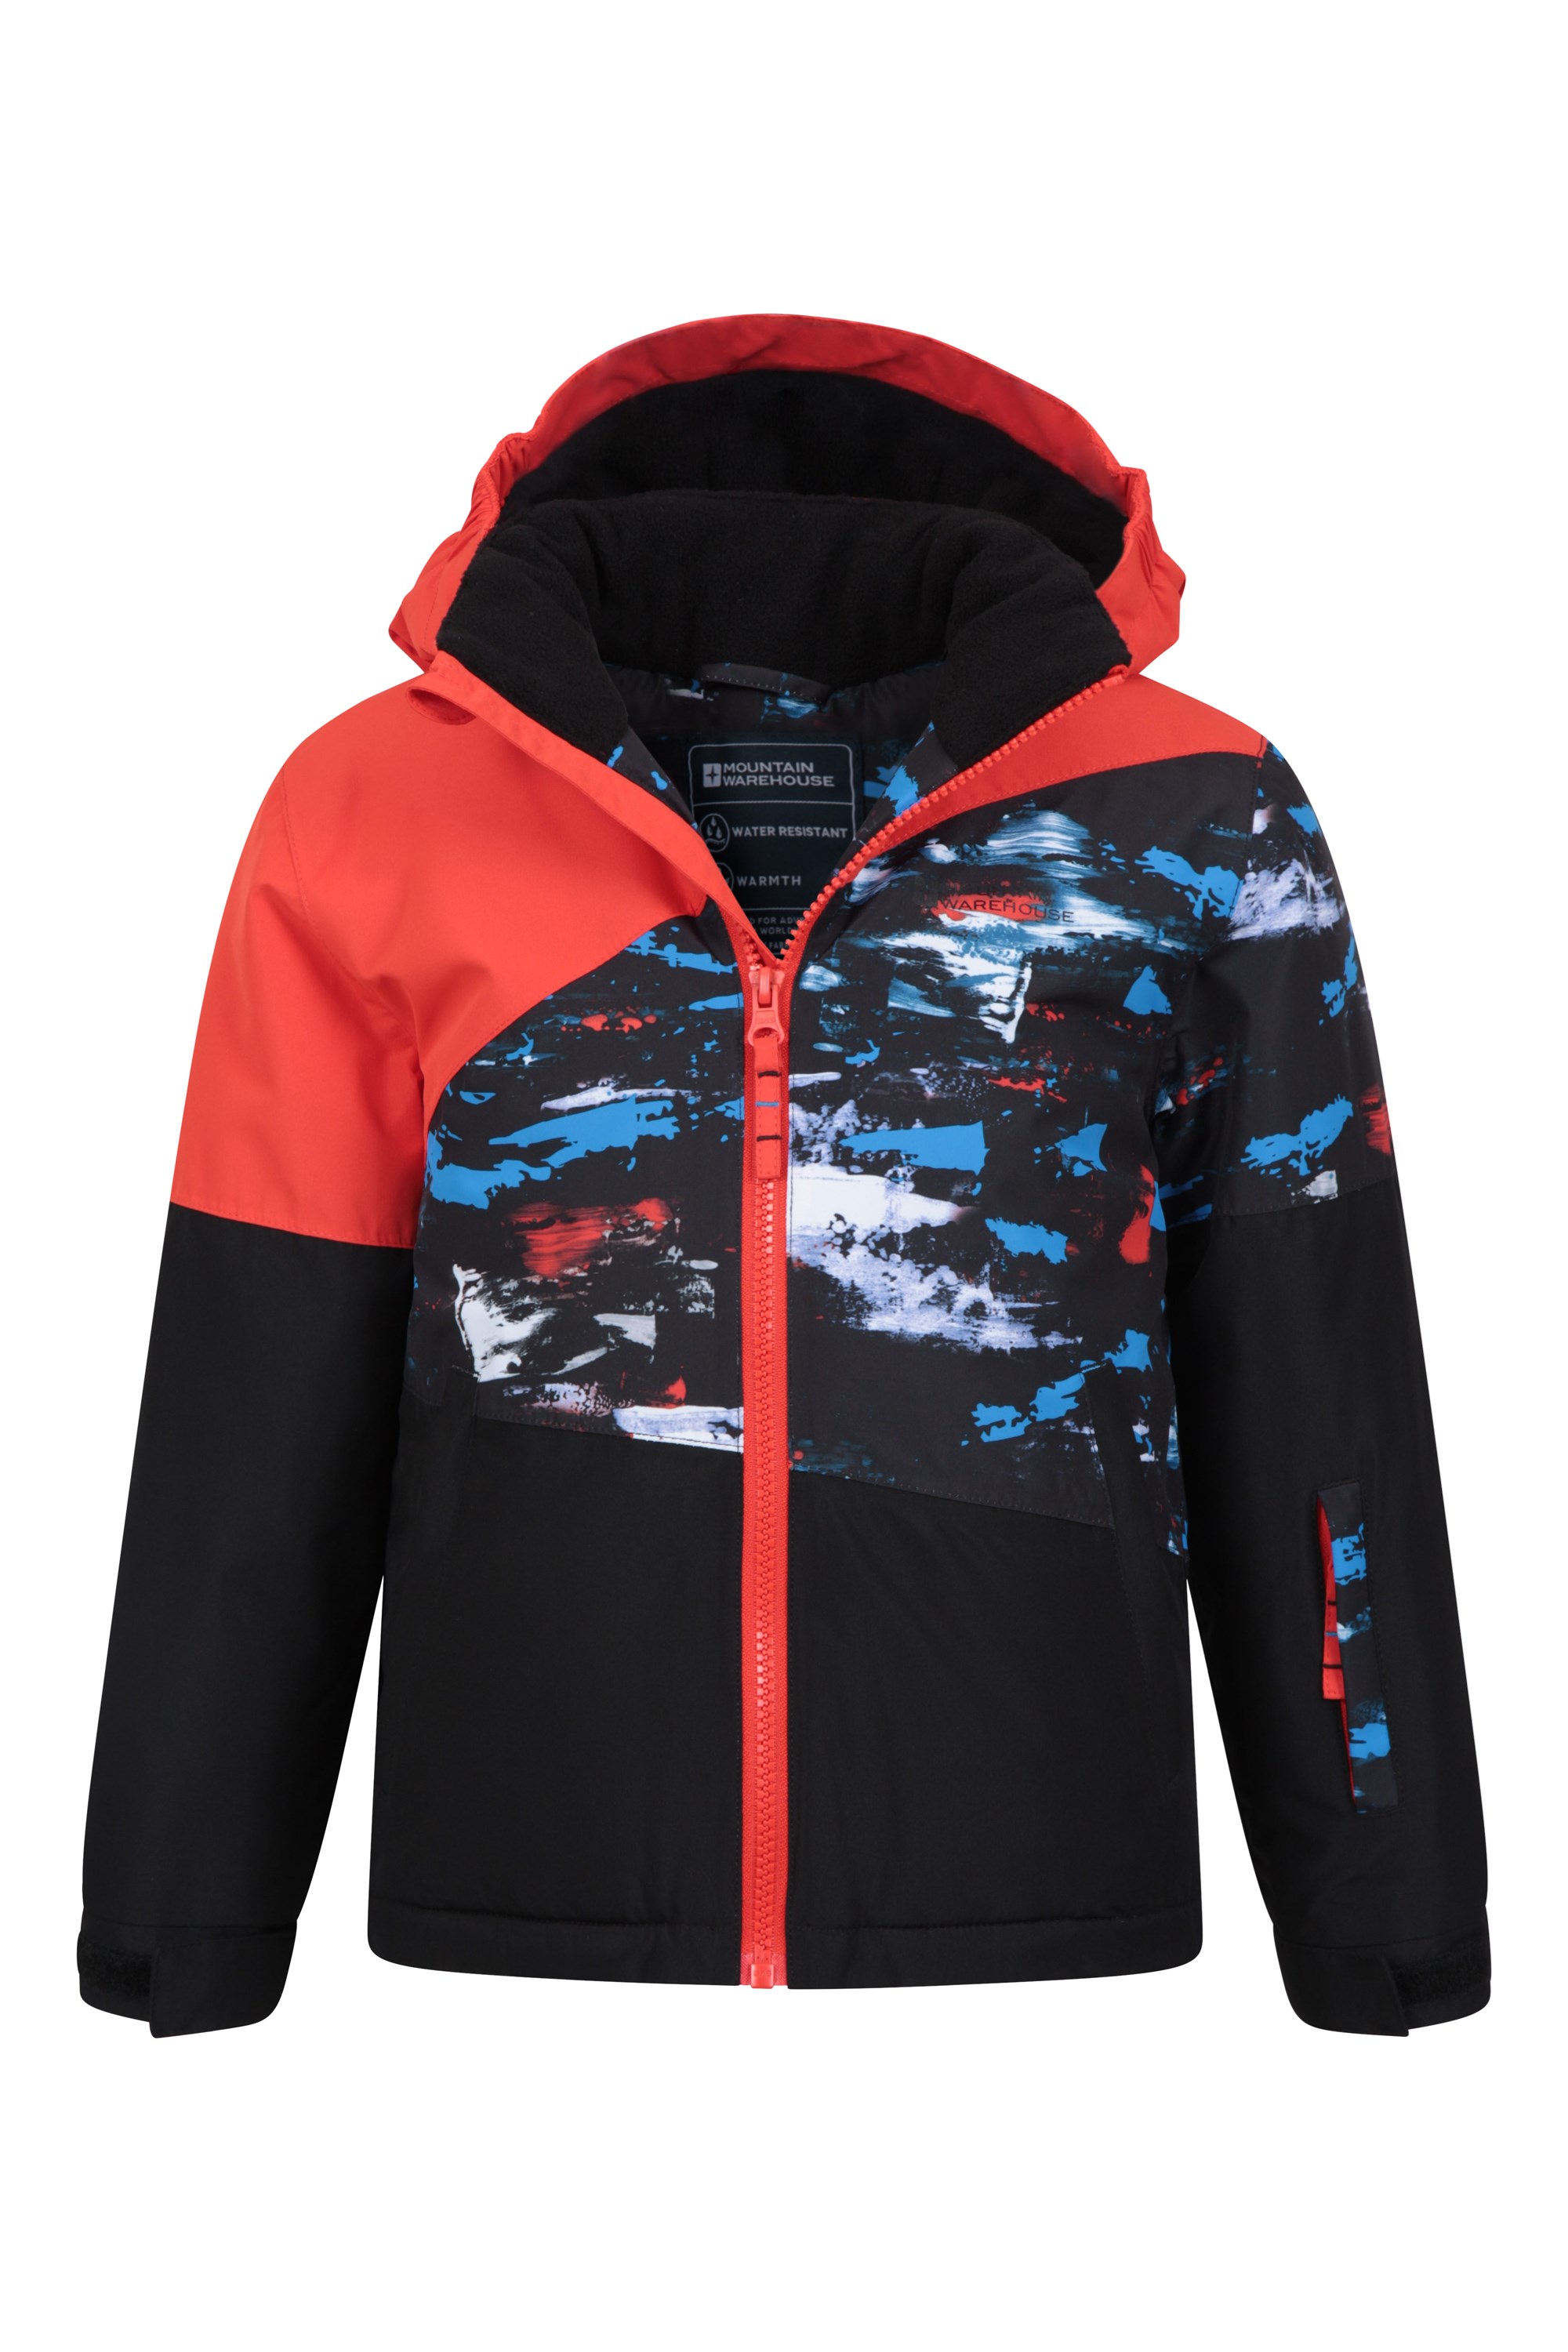 Mountain Warehouse Peak Printed Kids Ski Jacket 